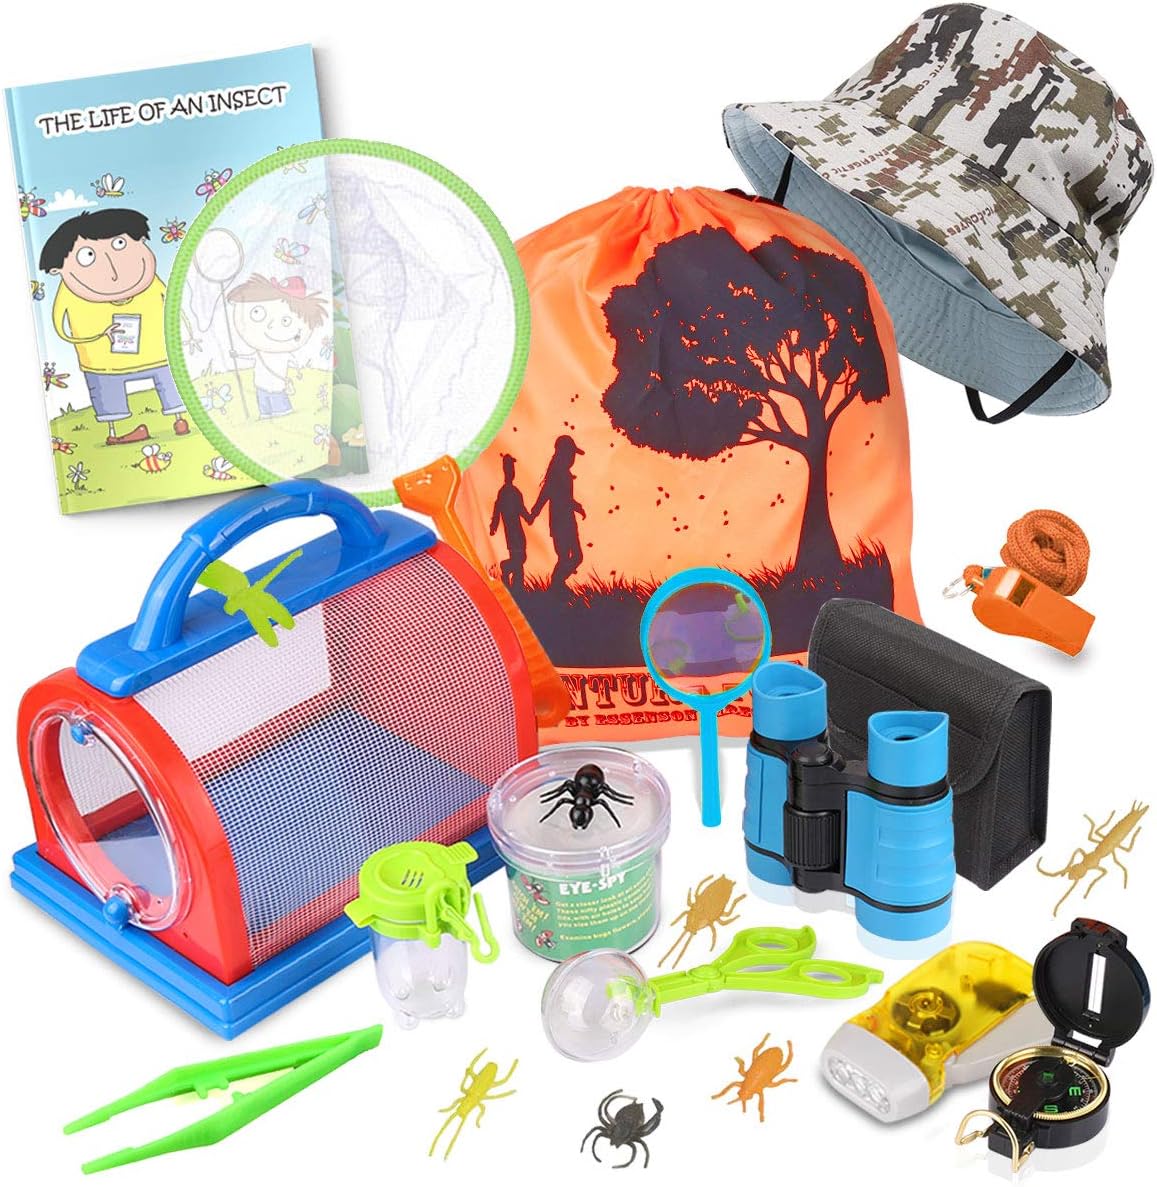 Outdoor Explorer Kit with Binoculars, Flashlight, Compass for Backyard Exploration - Great Kids Gifts